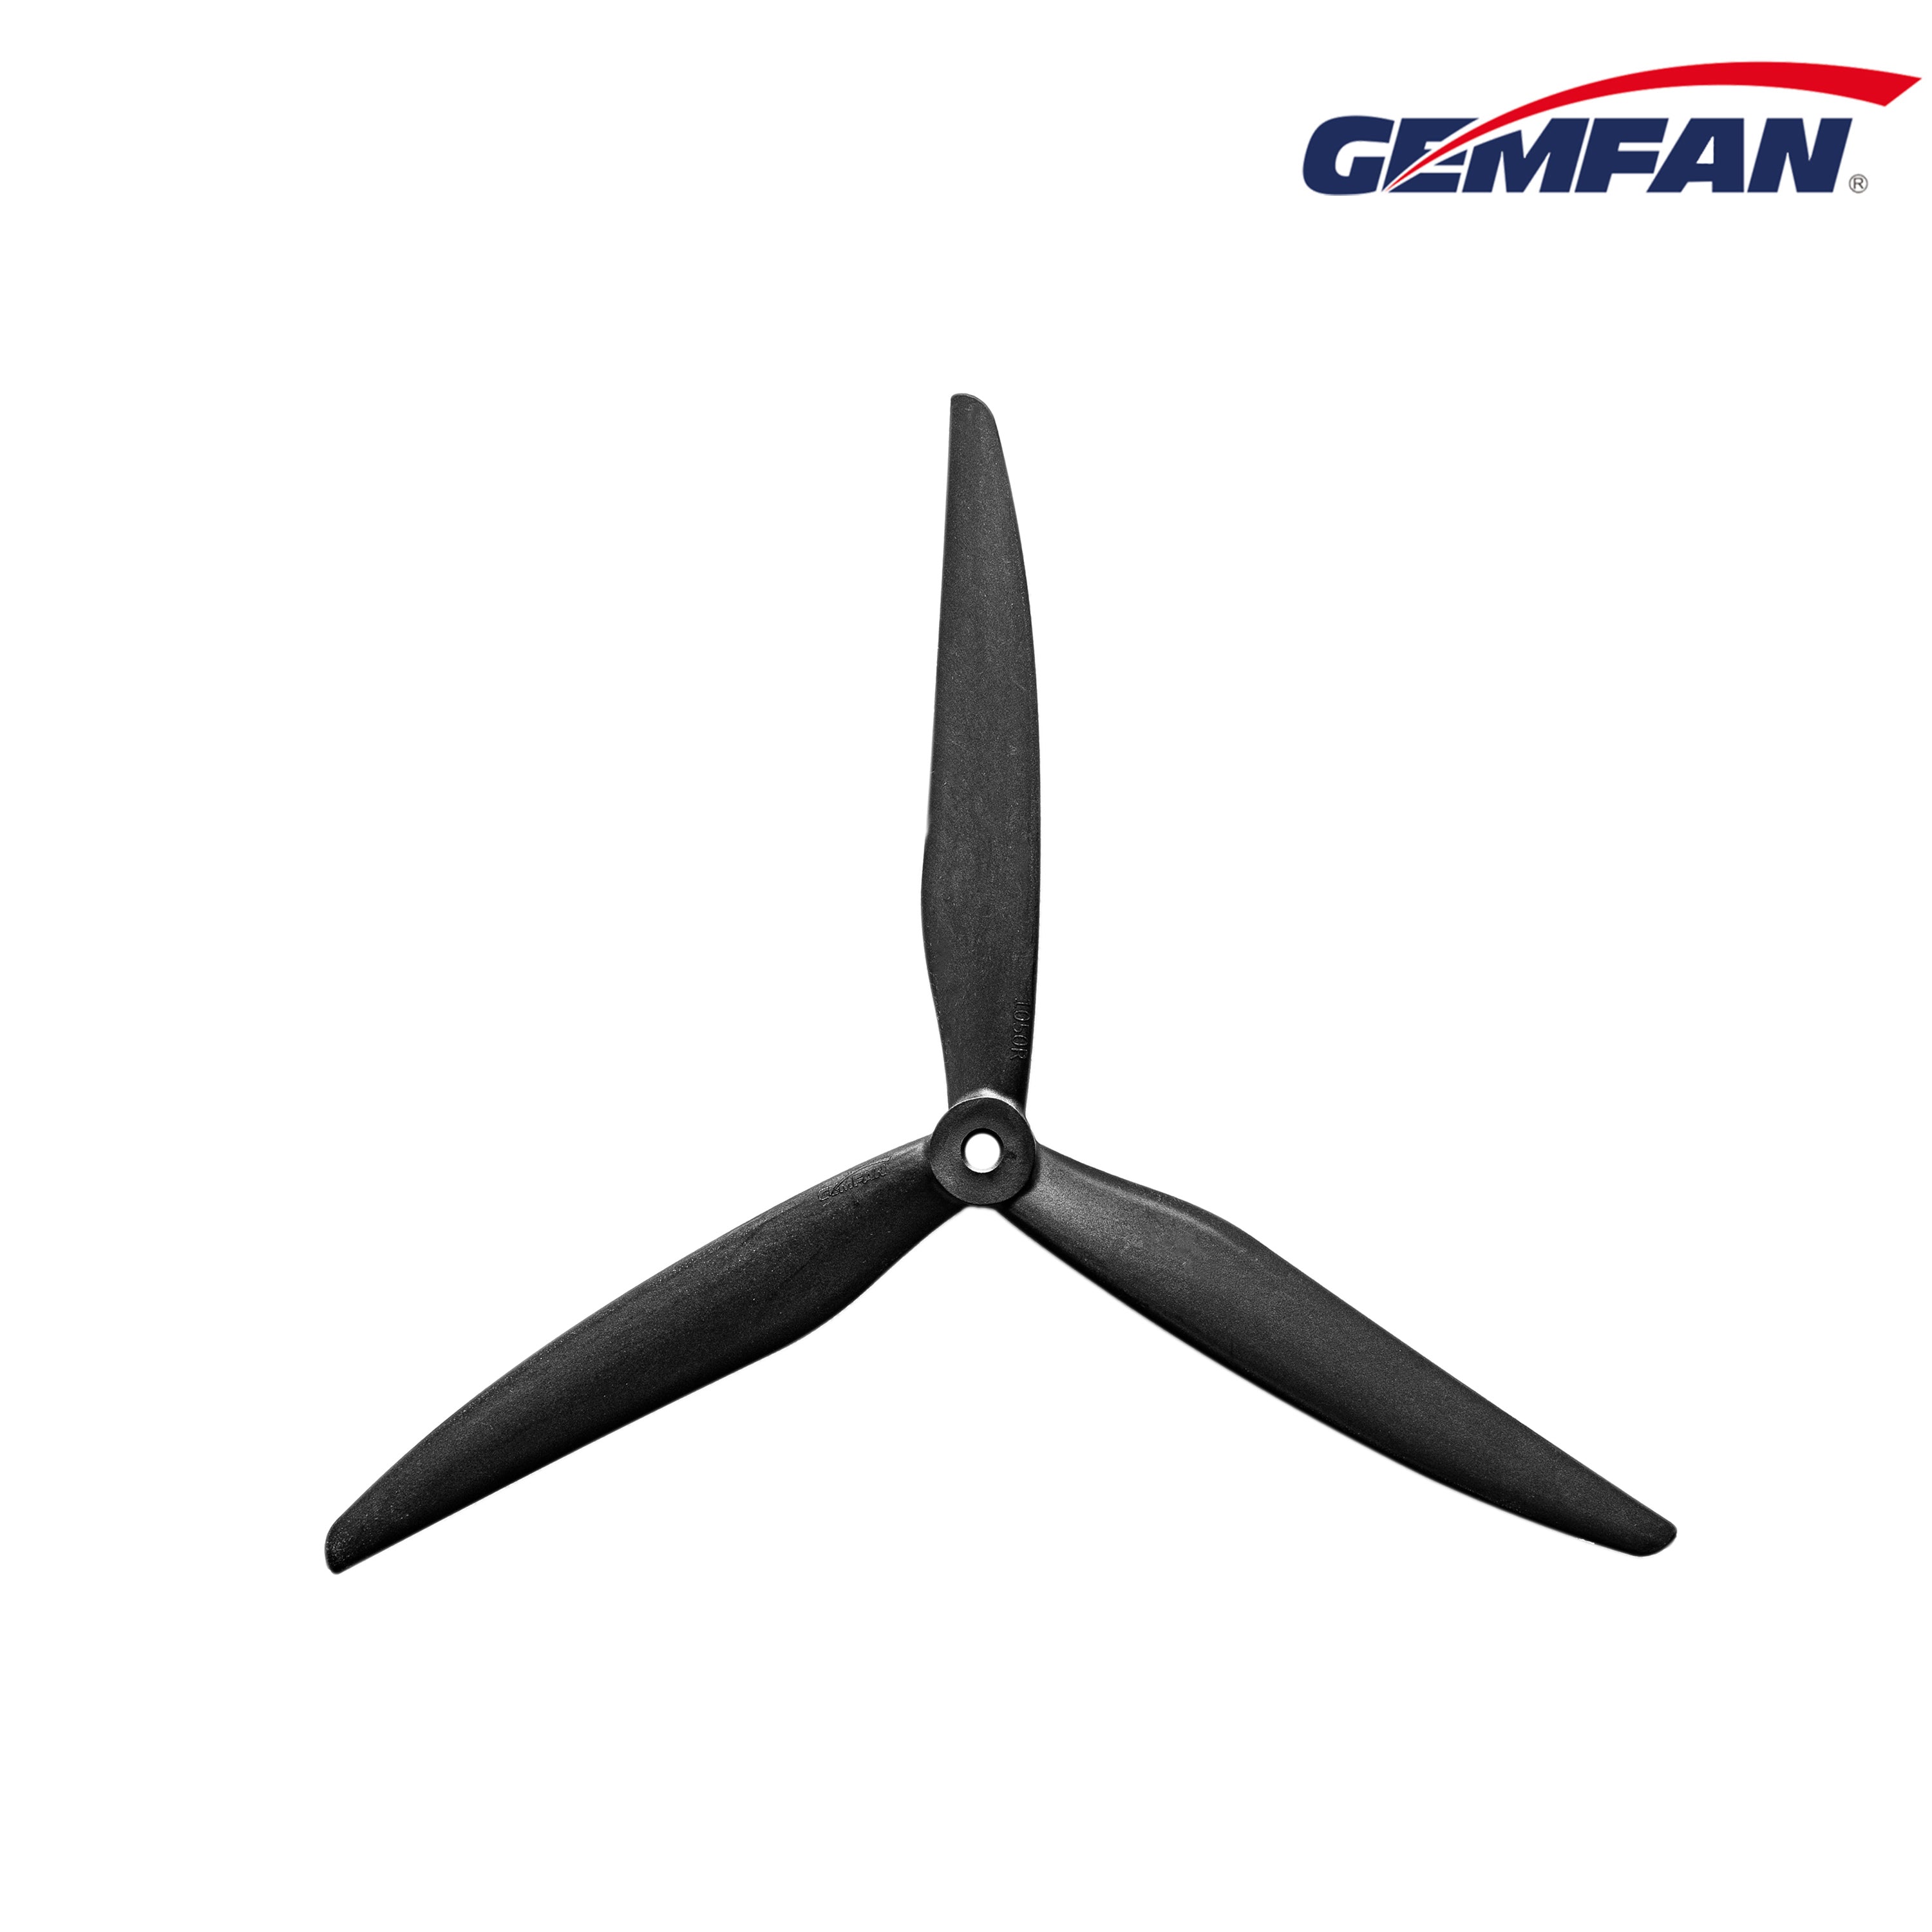 Gemfan CL Cinelifter 1050 Carbon Nylon 3-Blade Propeller (1CW + 1CCW)